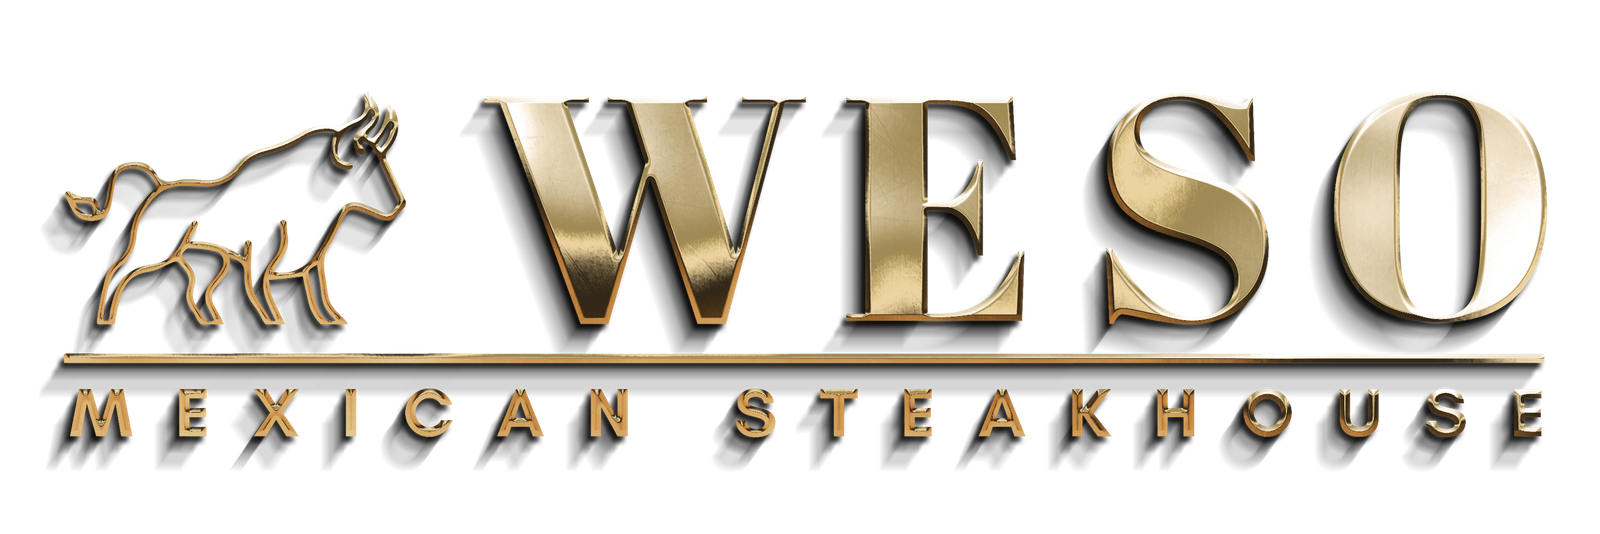 weso logo